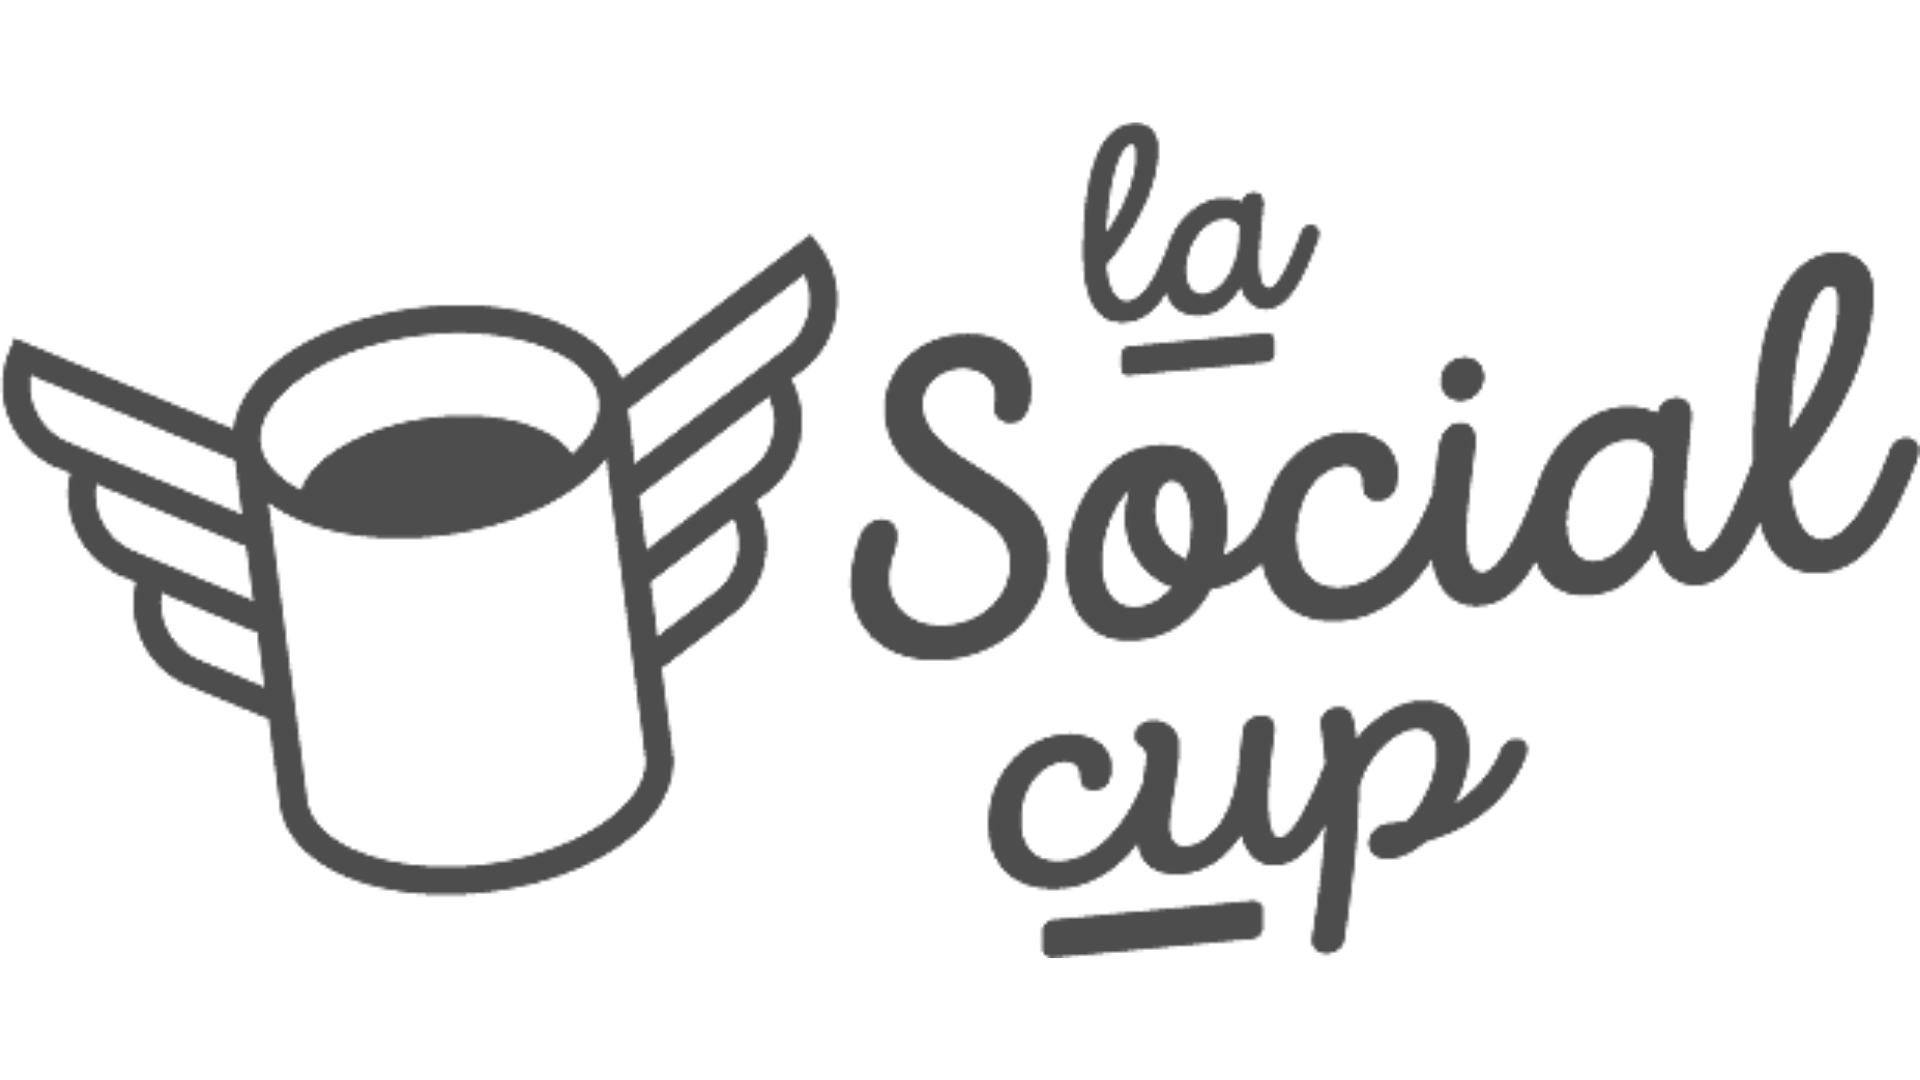 Social Cup